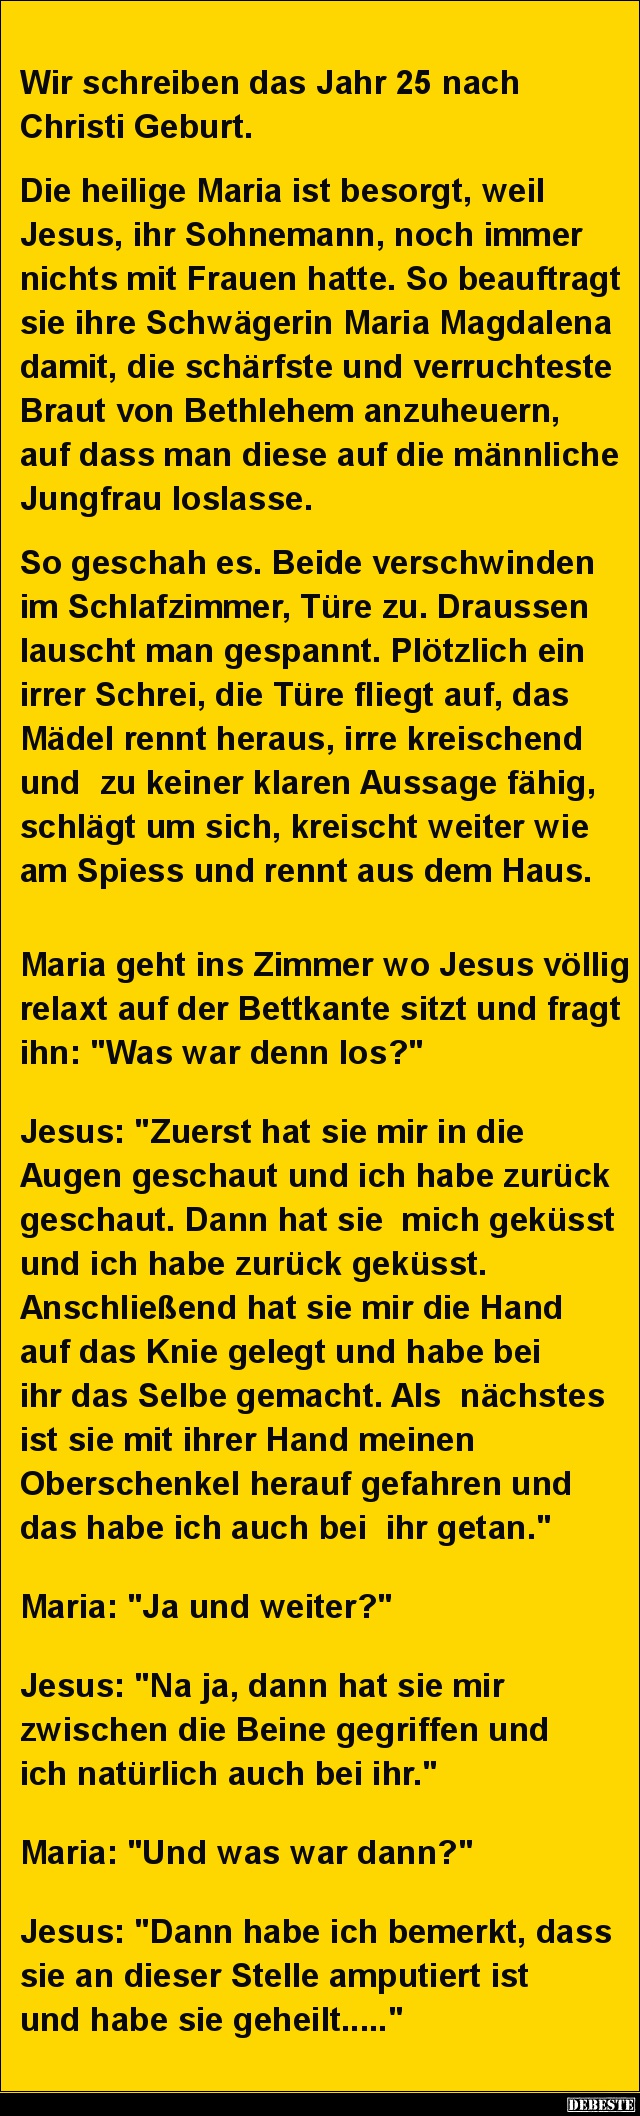 Die heilige Maria ist besorgt, weil.. - Lustige Bilder | DEBESTE.de